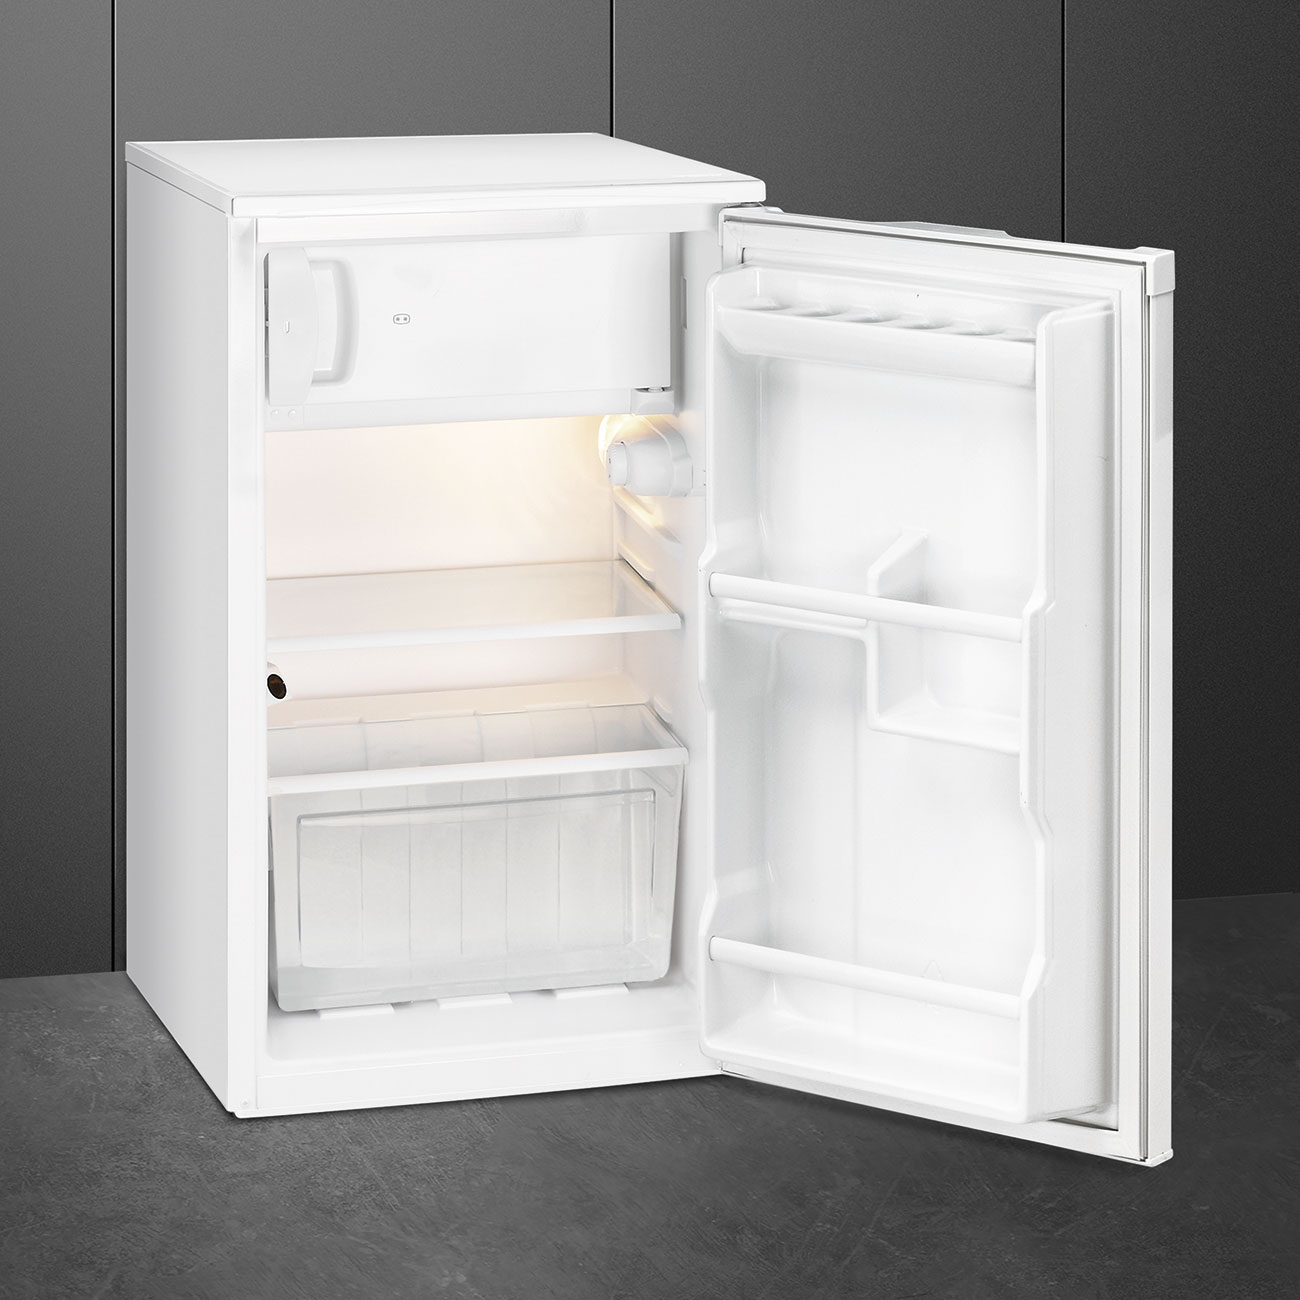 Under counter Free standing refrigerator - Smeg_2